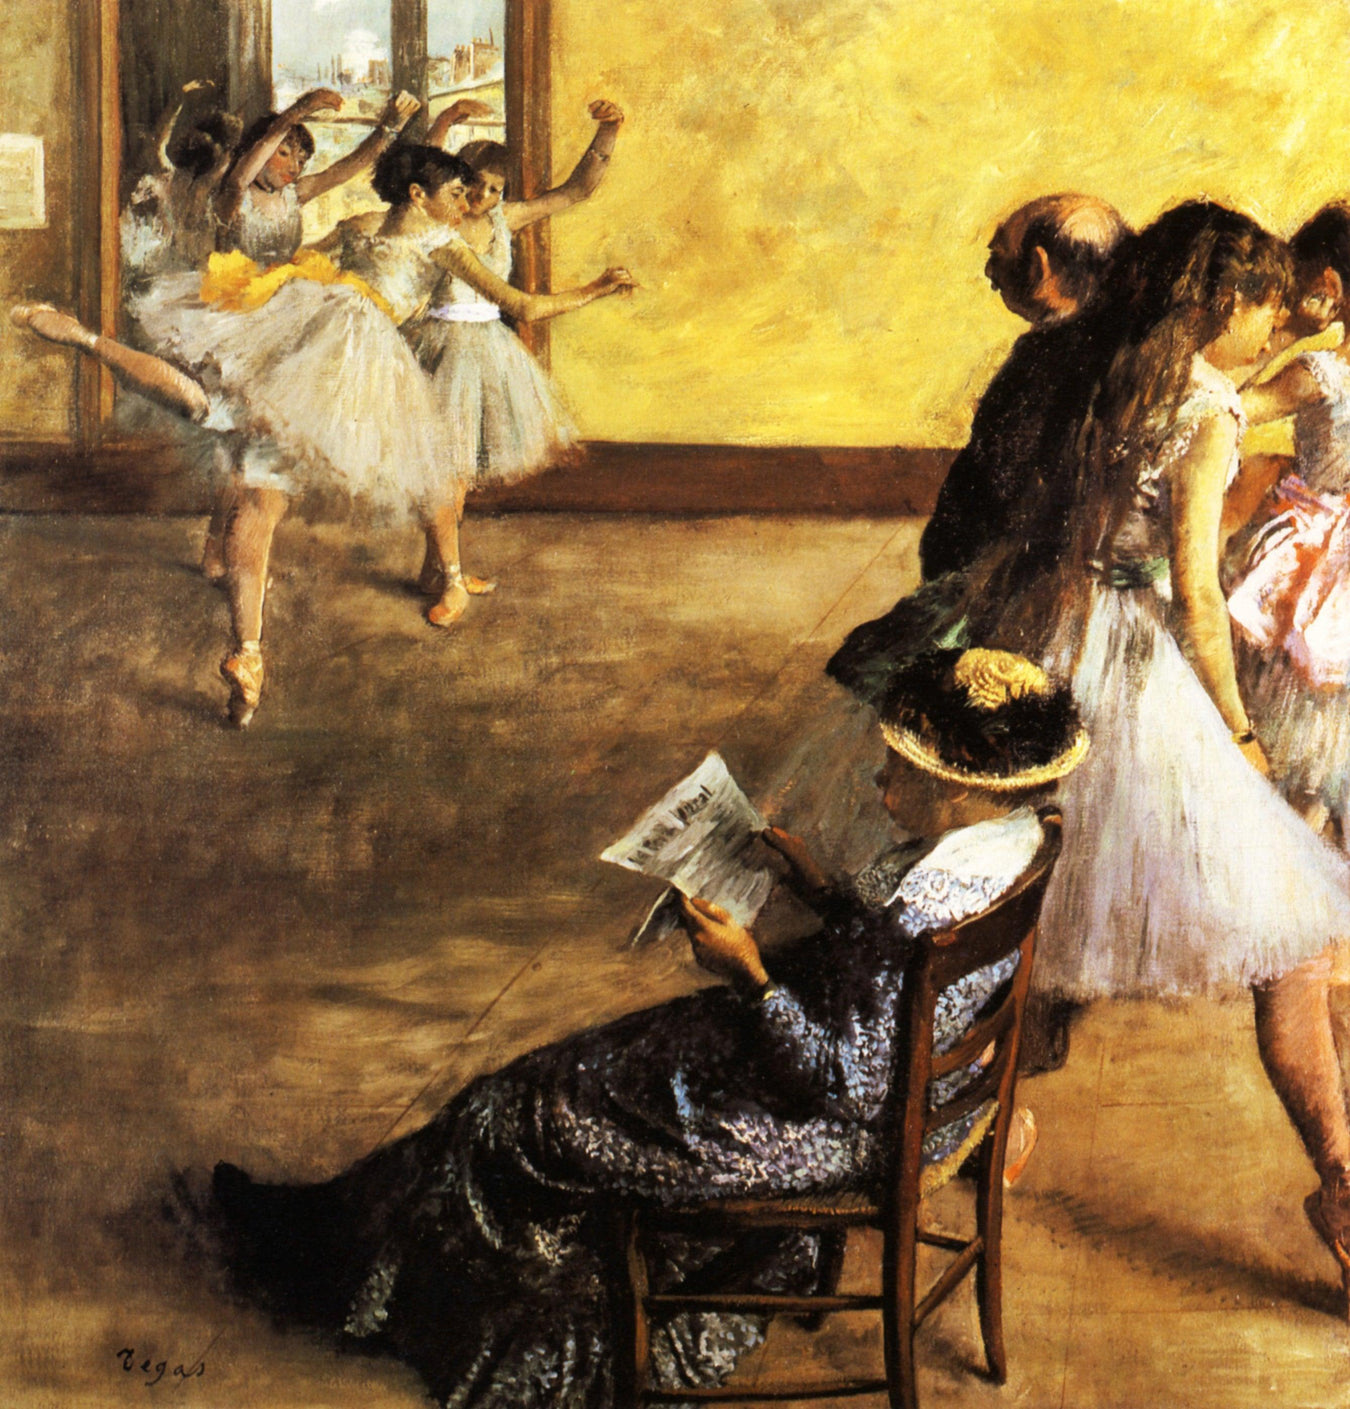 Art by Edgar Degas